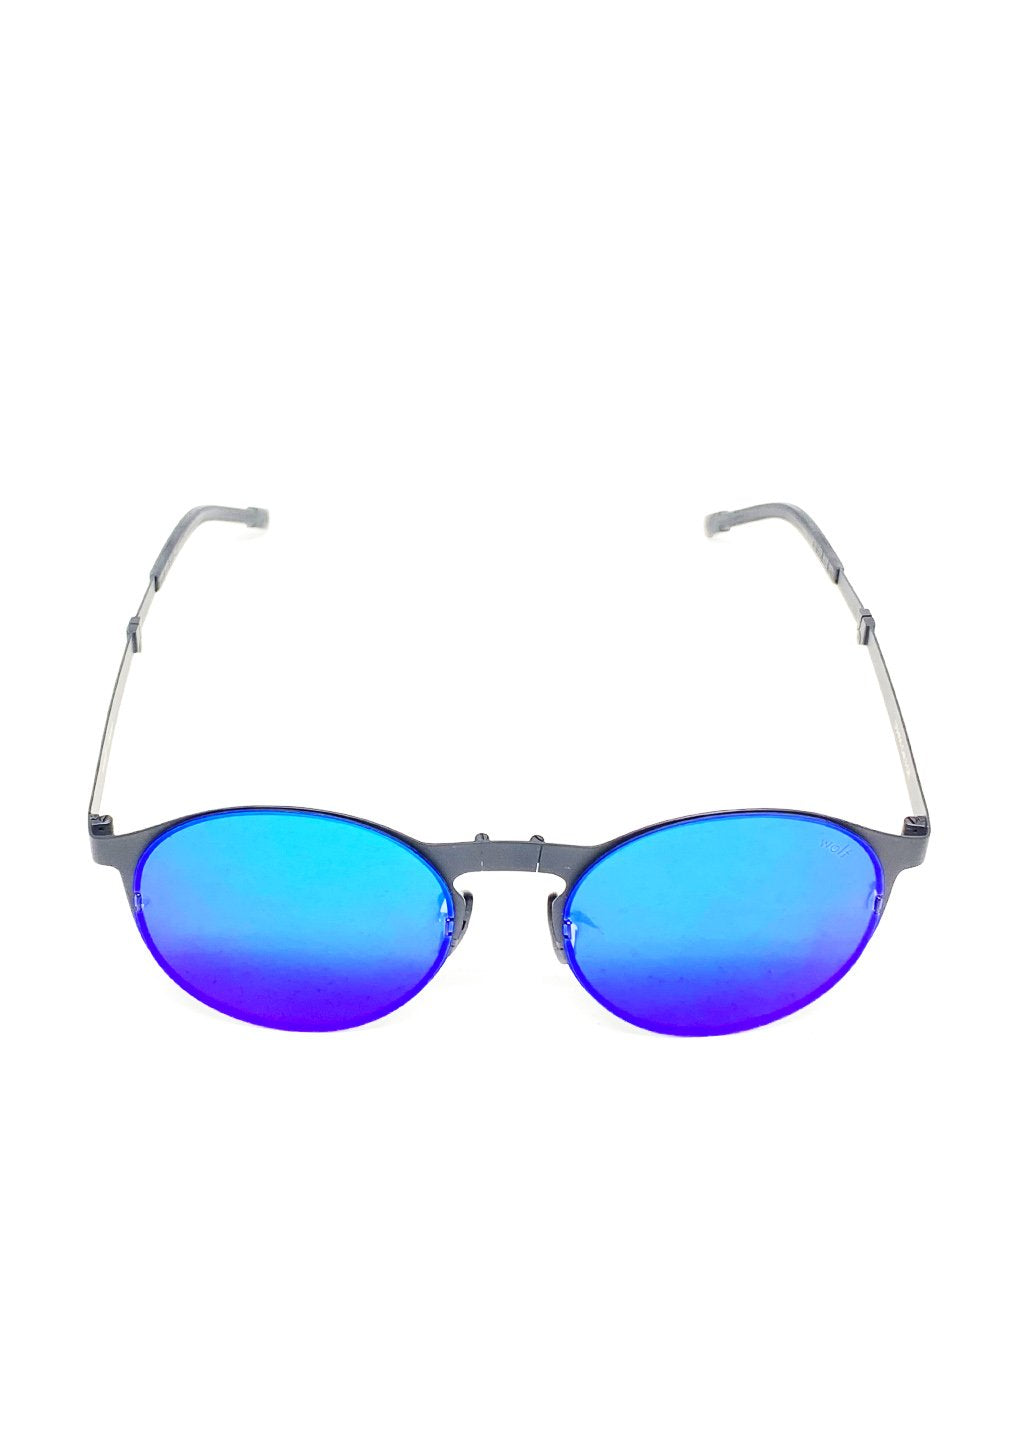 Looper - Foldable Round Sunglasses